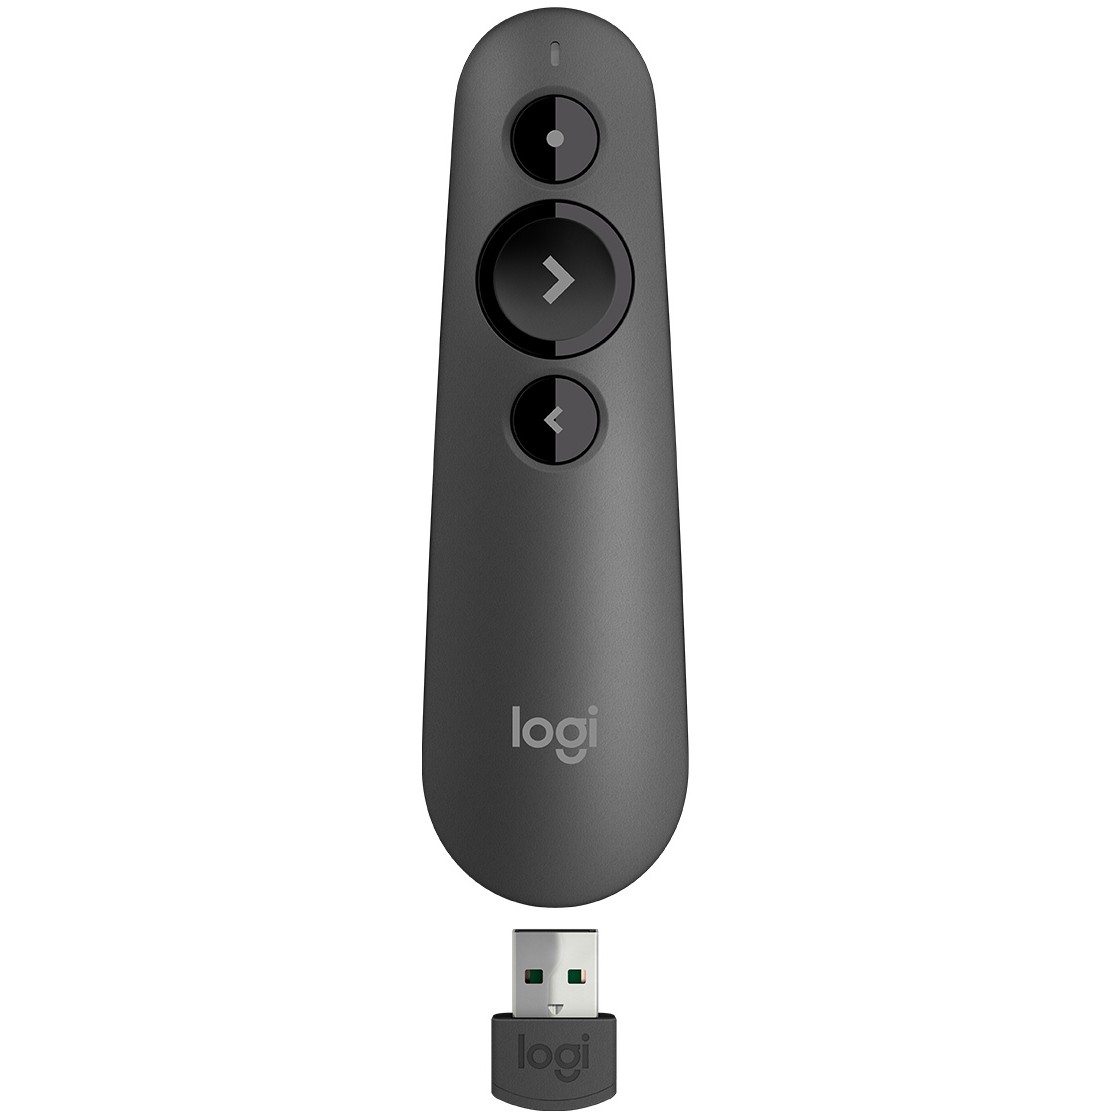 Logitech R500 wireless presenter